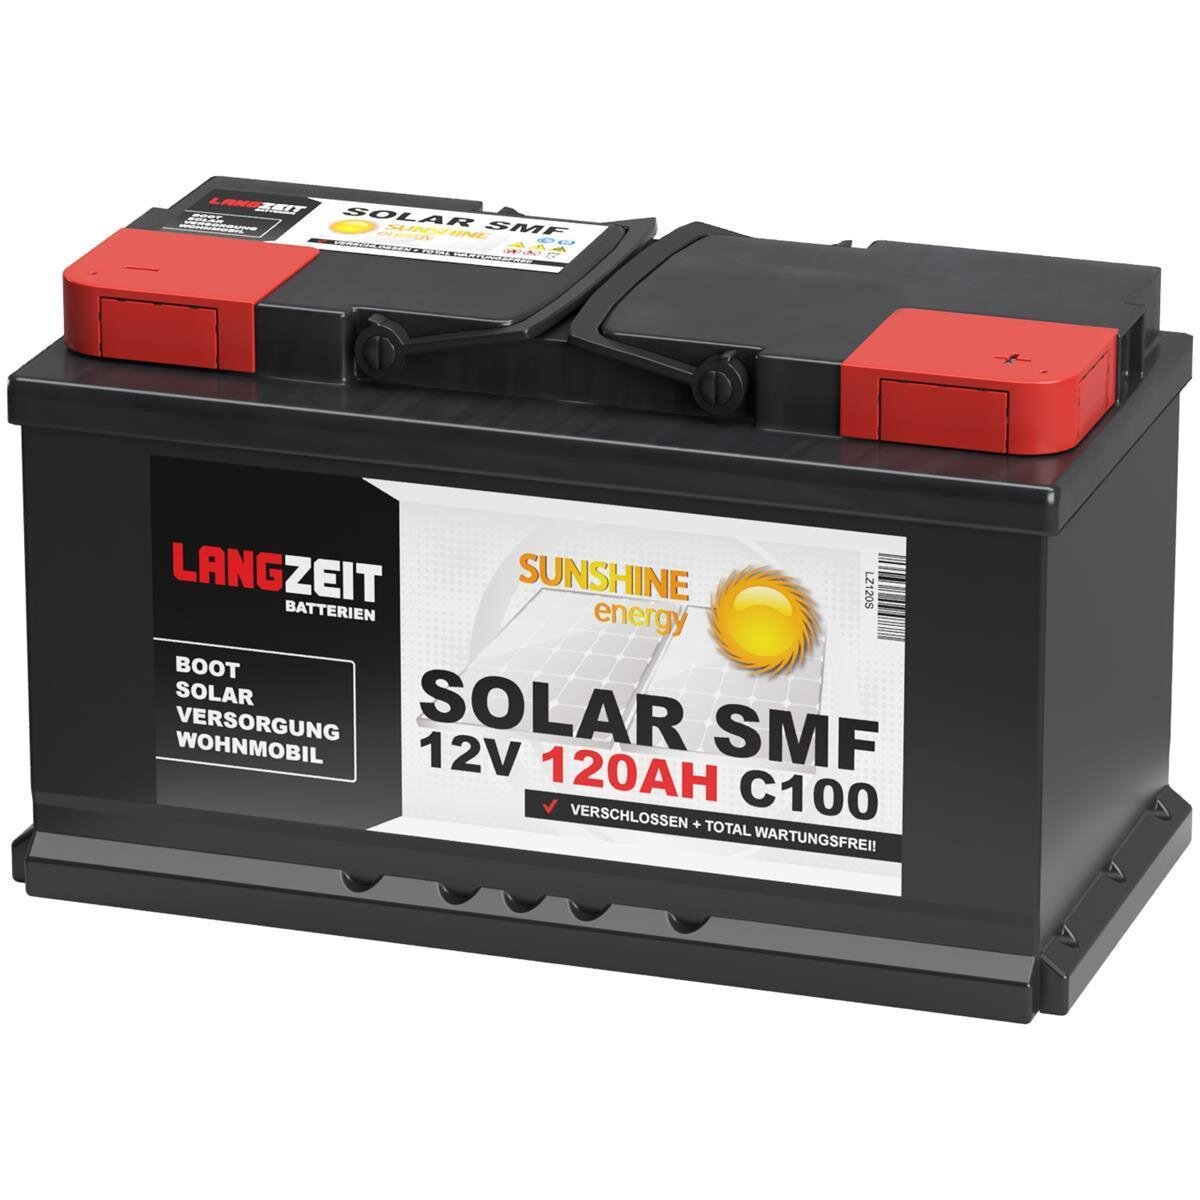 Langzeit Solarbatterie SMF 120Ah 12V, 128,49 €